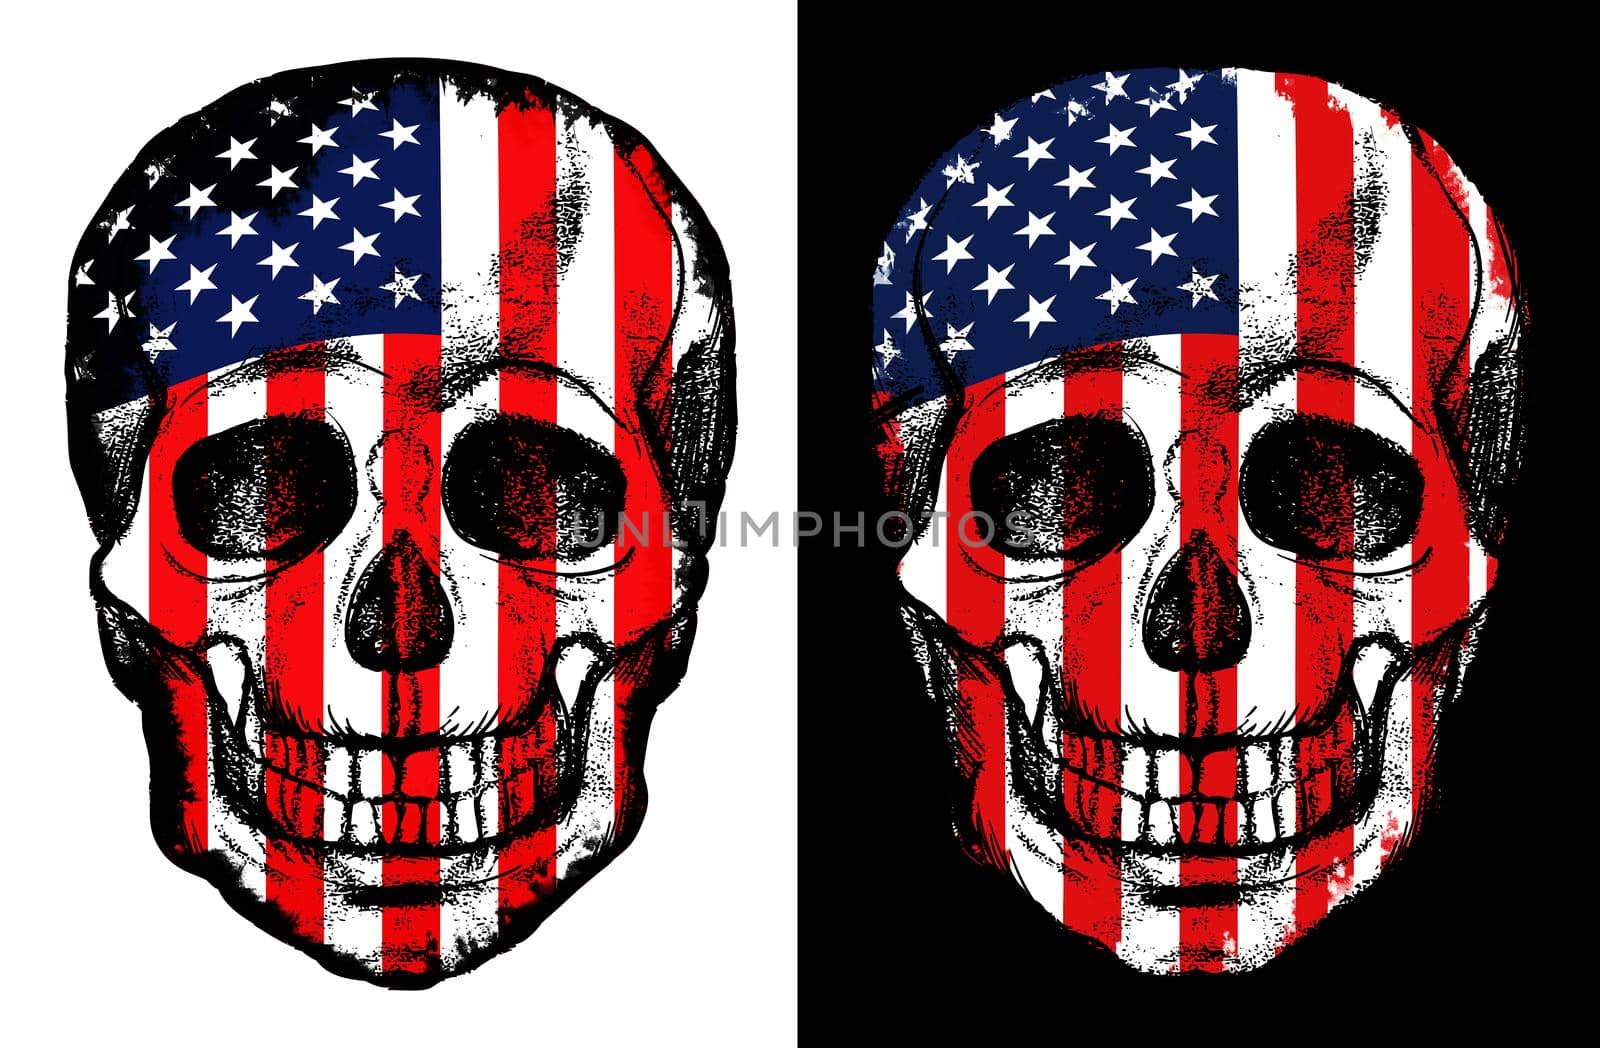 United States Flag Skull illustration on a white and black bacground. by SlayCer